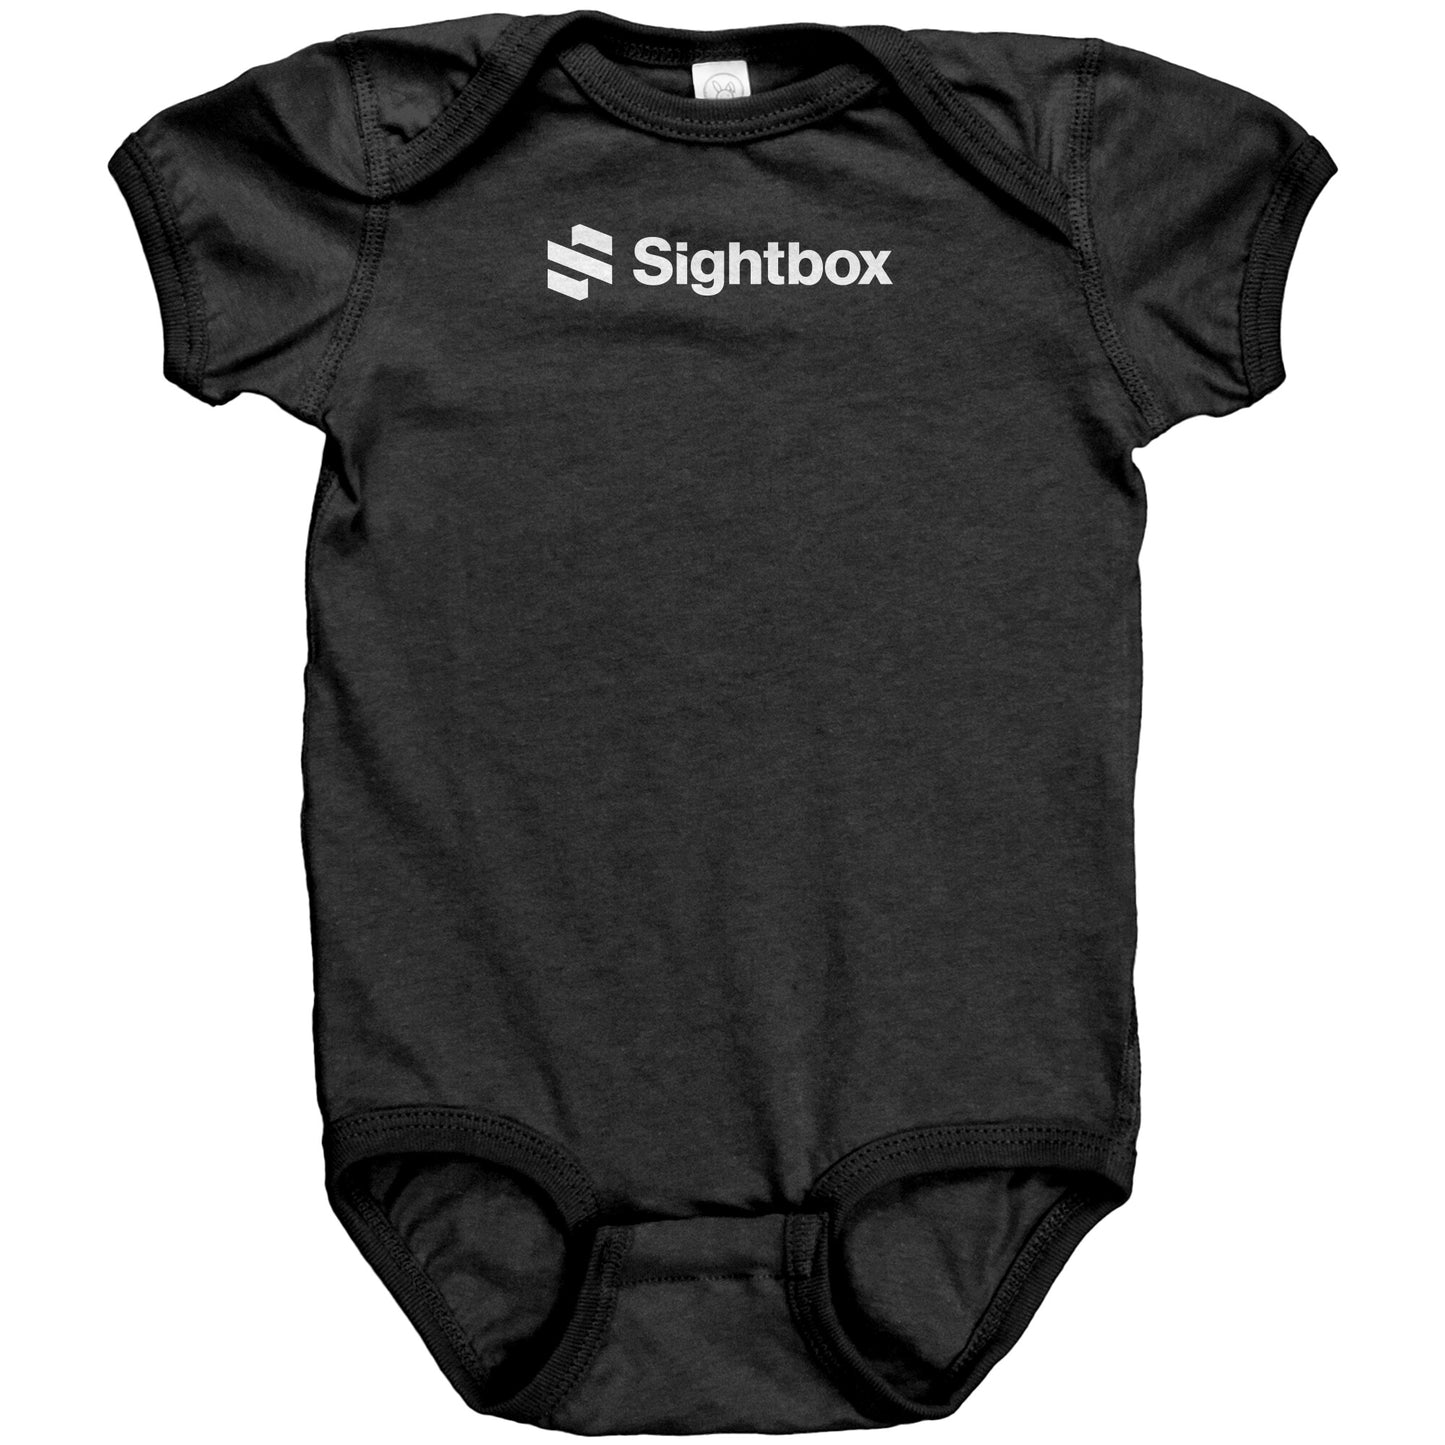 Sightbox 3 Baby